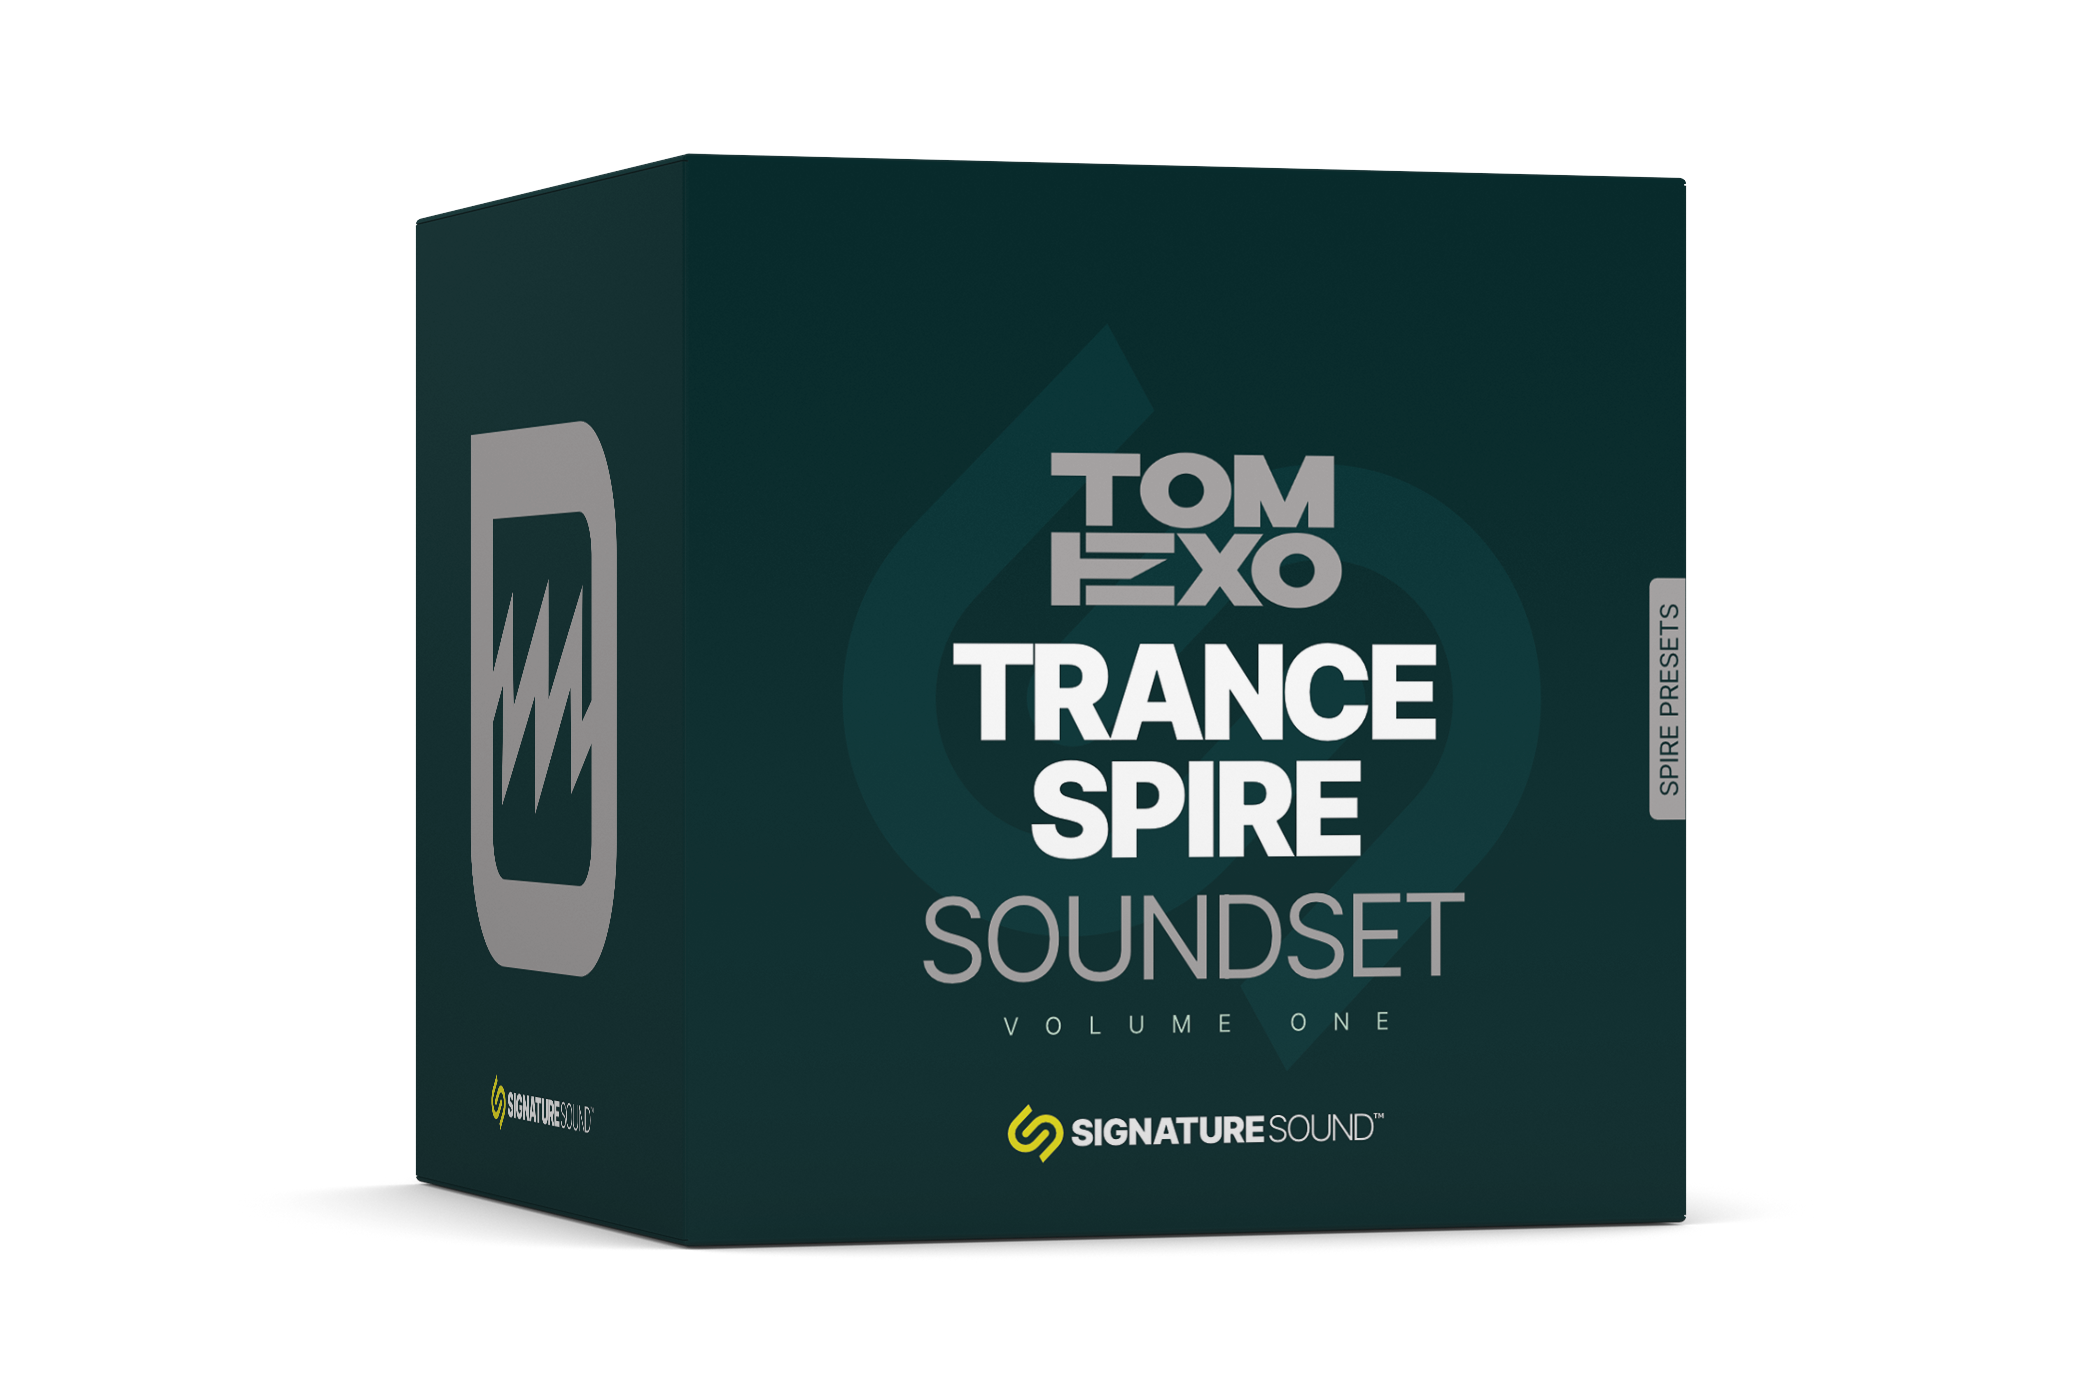 Tom Exo Trance Spire [Soundset] Volume One